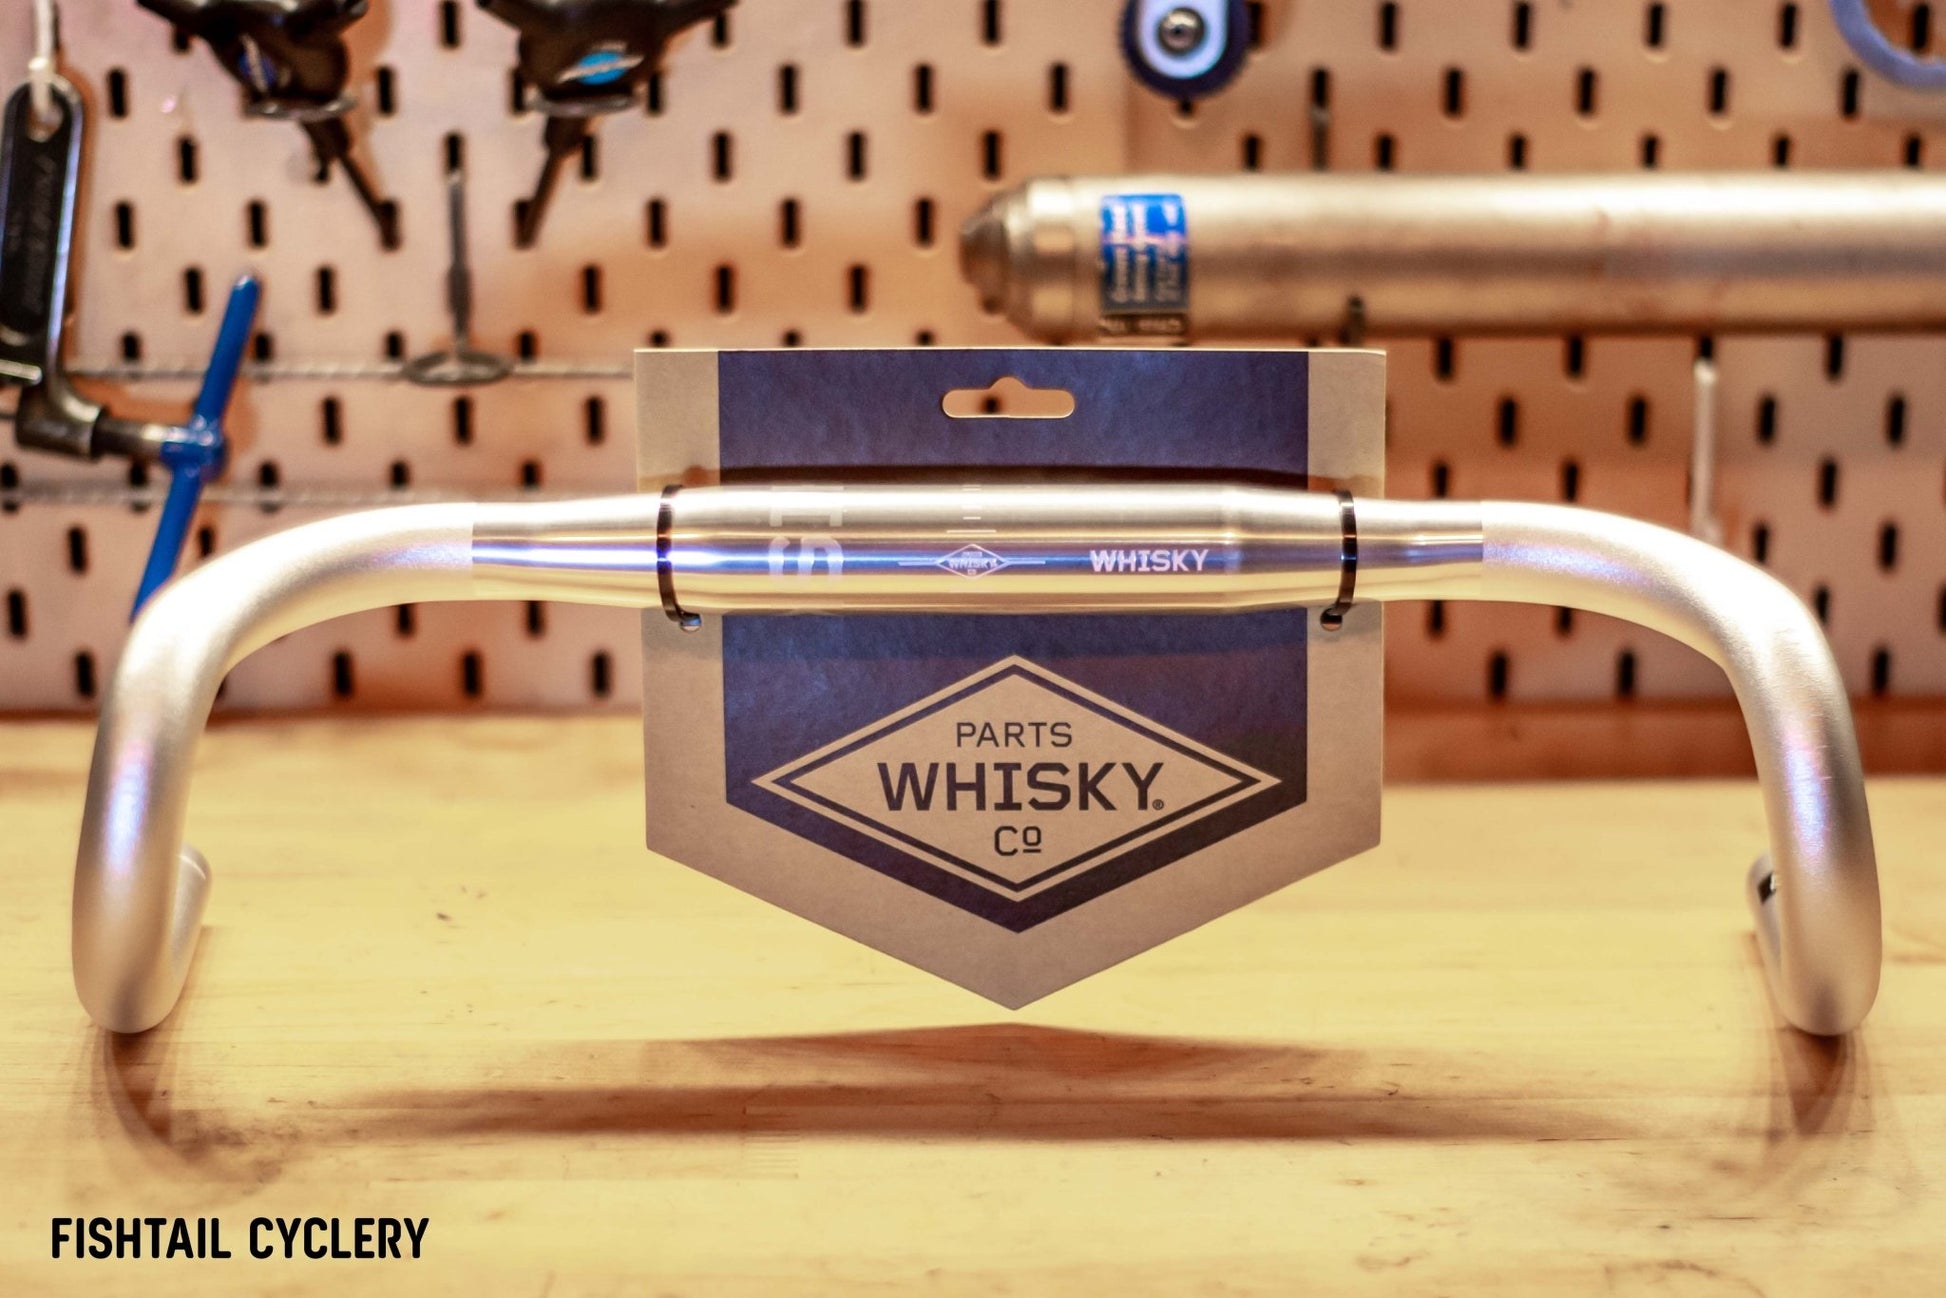 Whisky Parts Co - WHISKY No. 7 12F Drop Handlebar - FISHTAIL CYCLERY